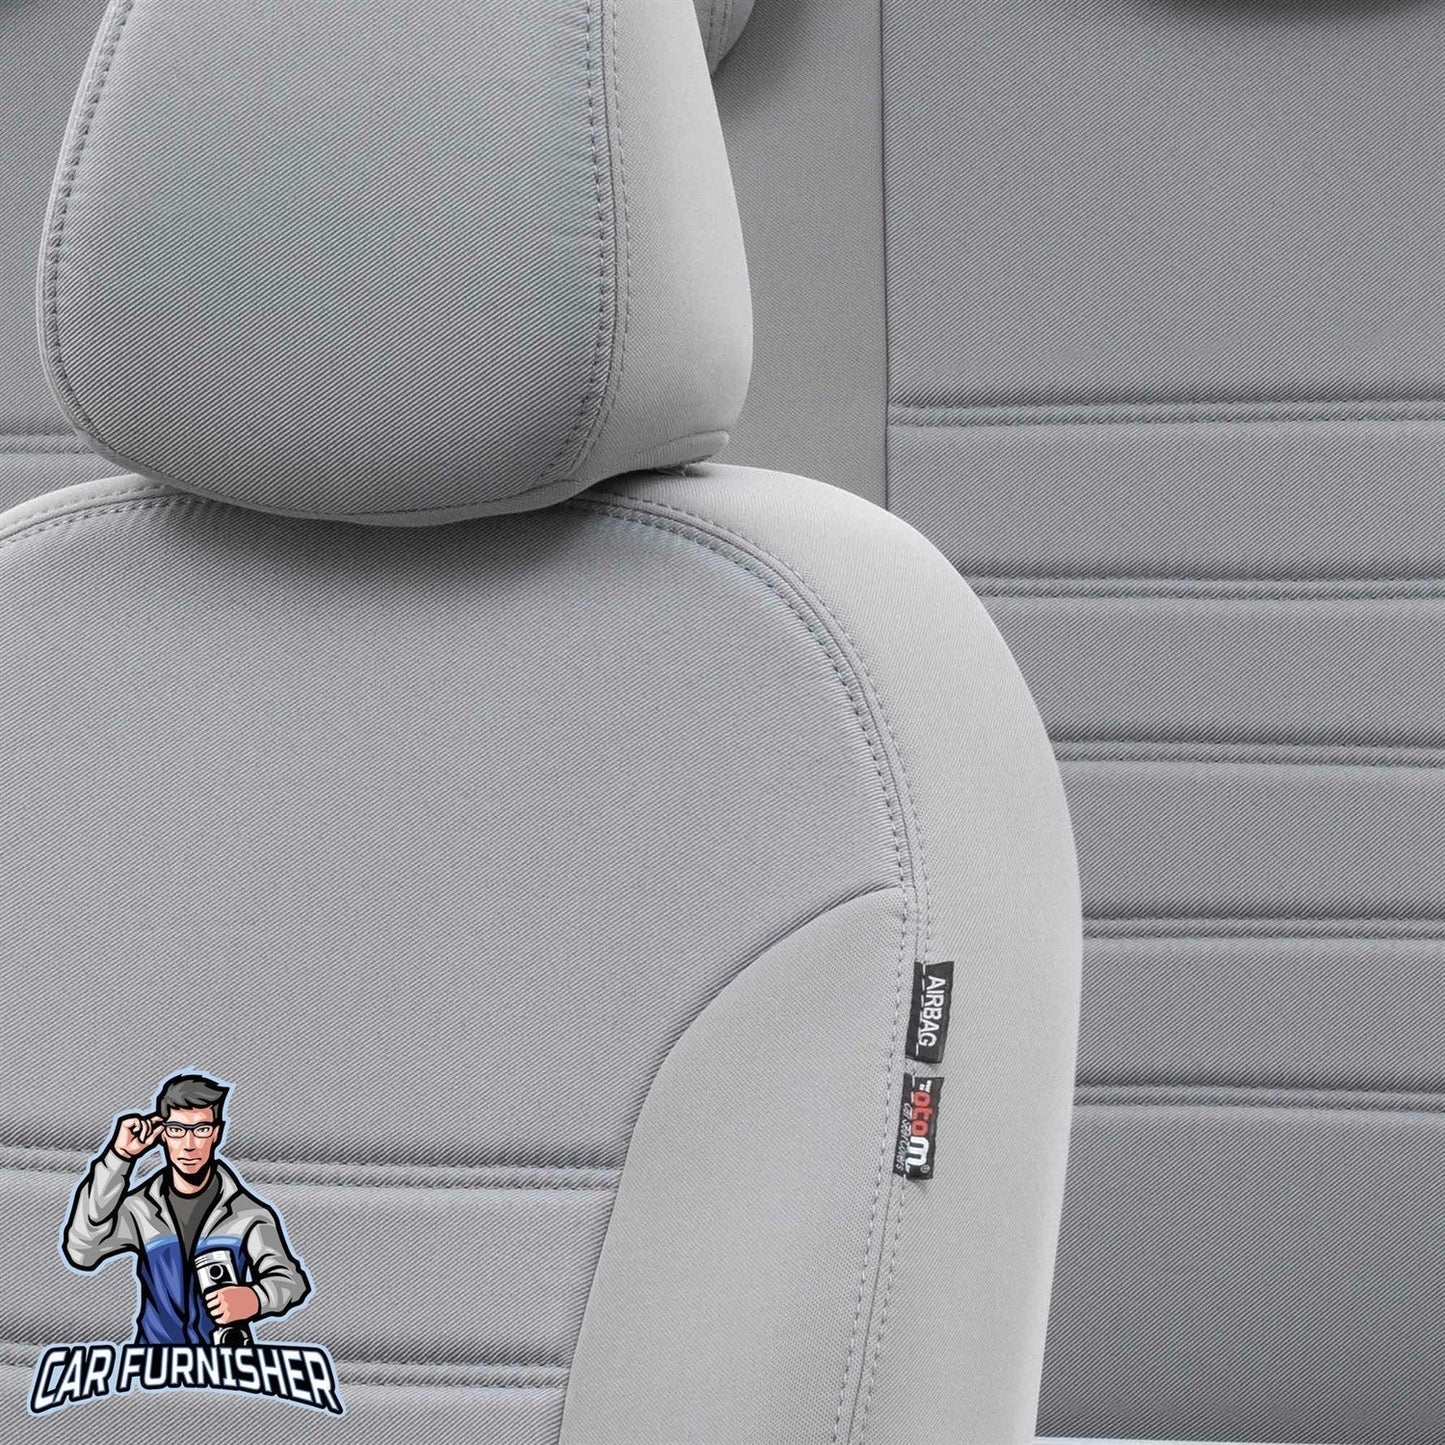 Iveco Stralis Seat Cover Original Jacquard Design Light Gray Front Seats (2 Seats + Handrest + Headrests) Jacquard Fabric